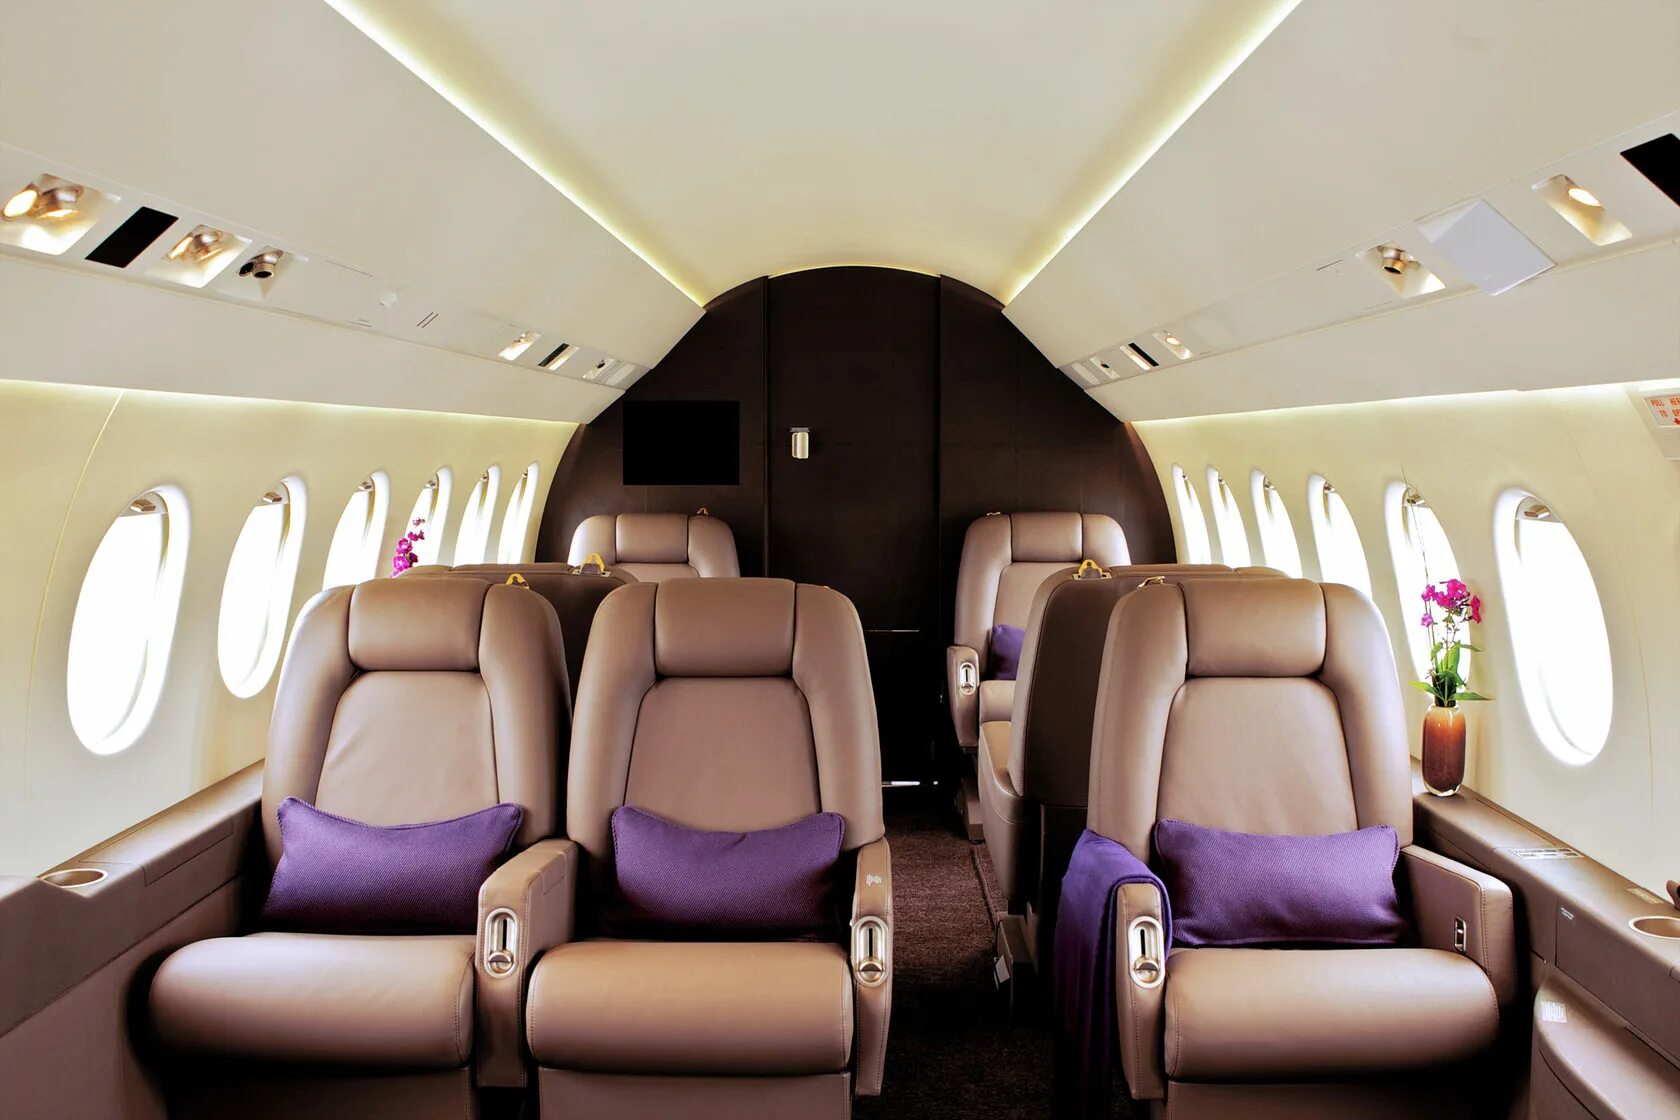 Салон самолета внутри. Салон бизнес Джет Airbus 320neo. Салон а320 бизнес Джет. Falcon 2000 Interior. МС-21 салон бизнес.